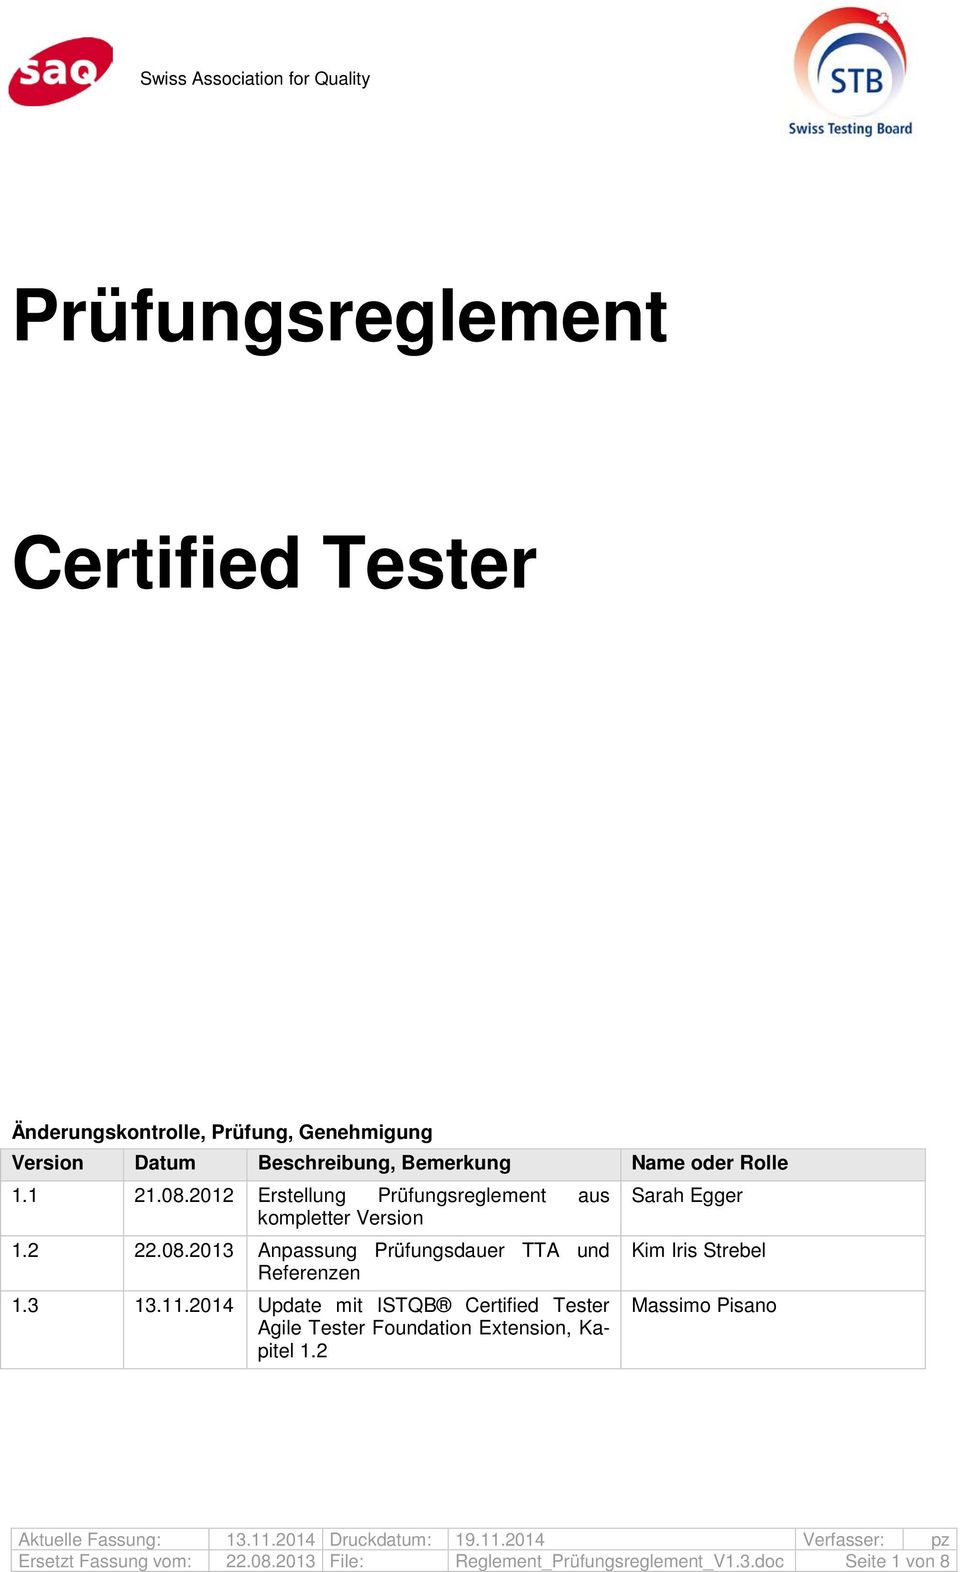 3 13.11.2014 Update mit ISTQB Certified Tester Massimo Pisano Agile Tester Foundation Extension, Kapitel 1.